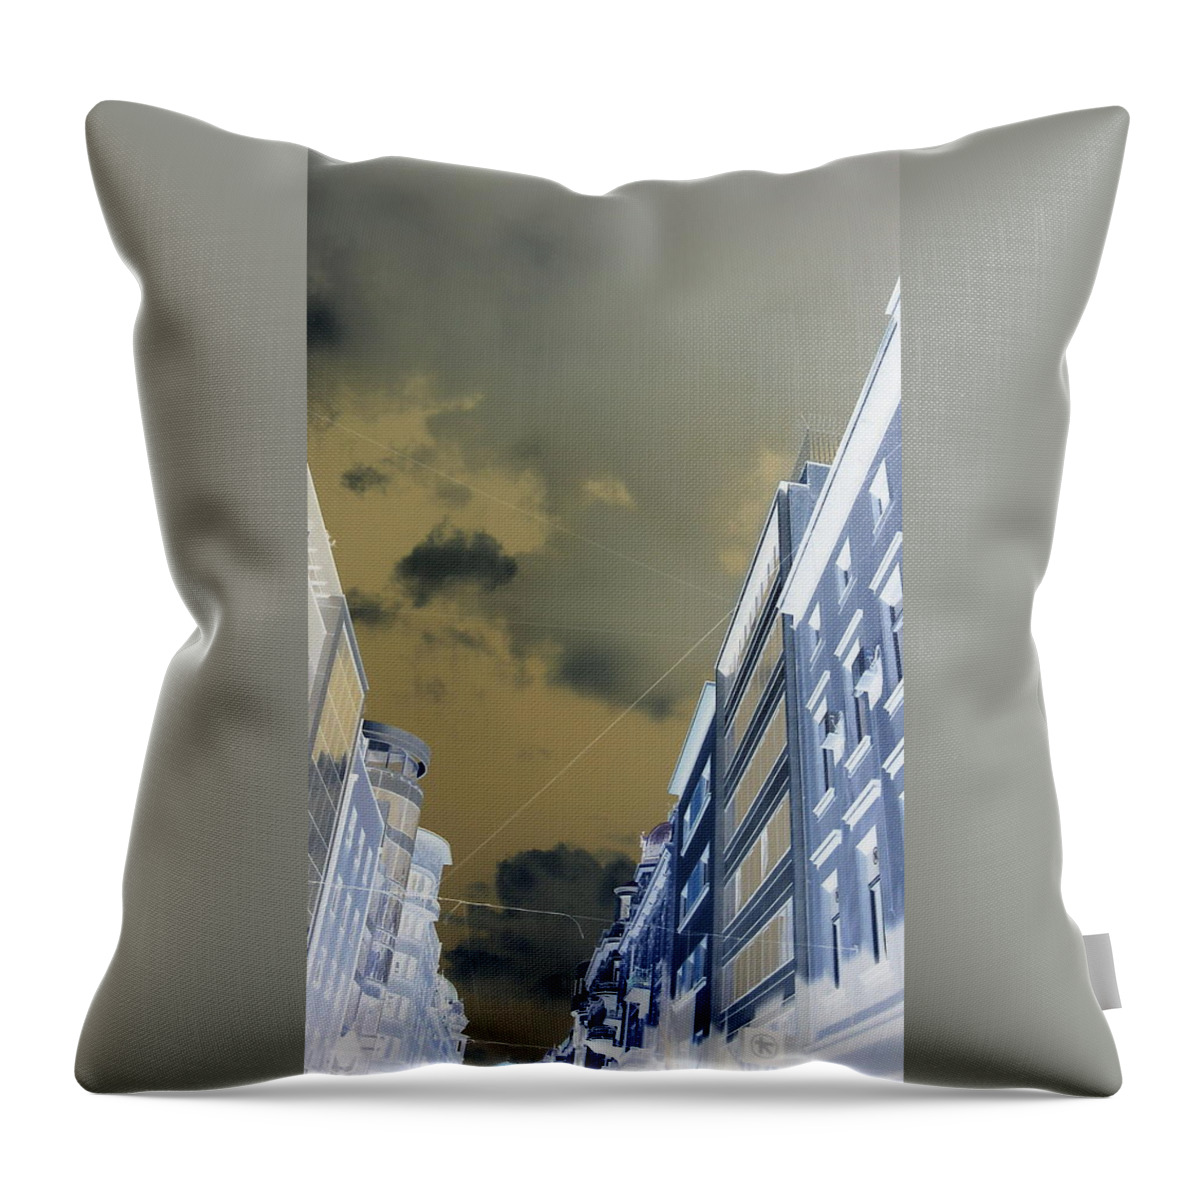 Belgrade Throw Pillow featuring the photograph Blue and white city by Anamarija Marinovic